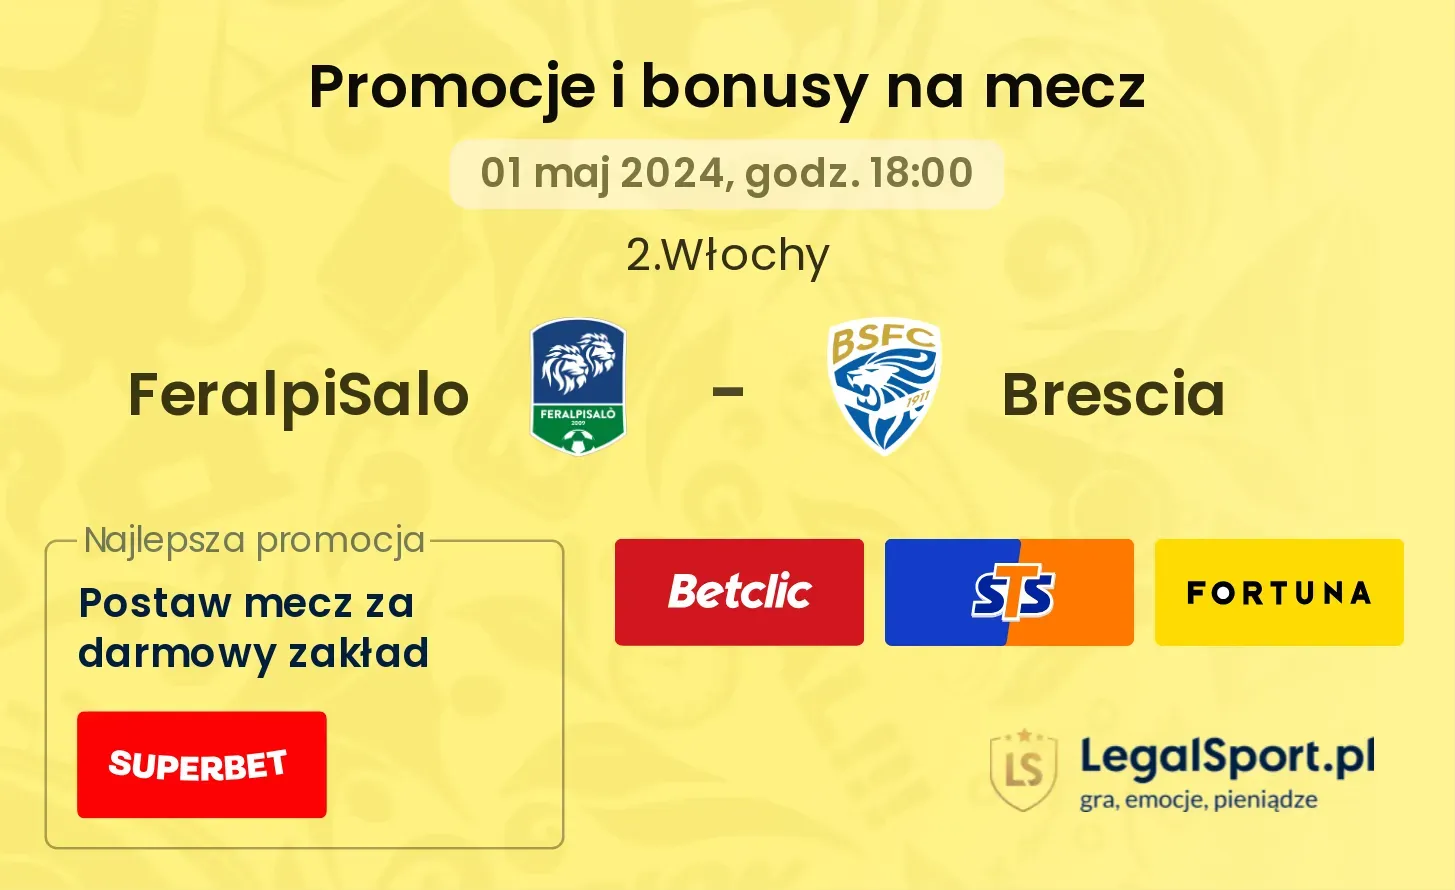 FeralpiSalo - Brescia promocje bonusy na mecz